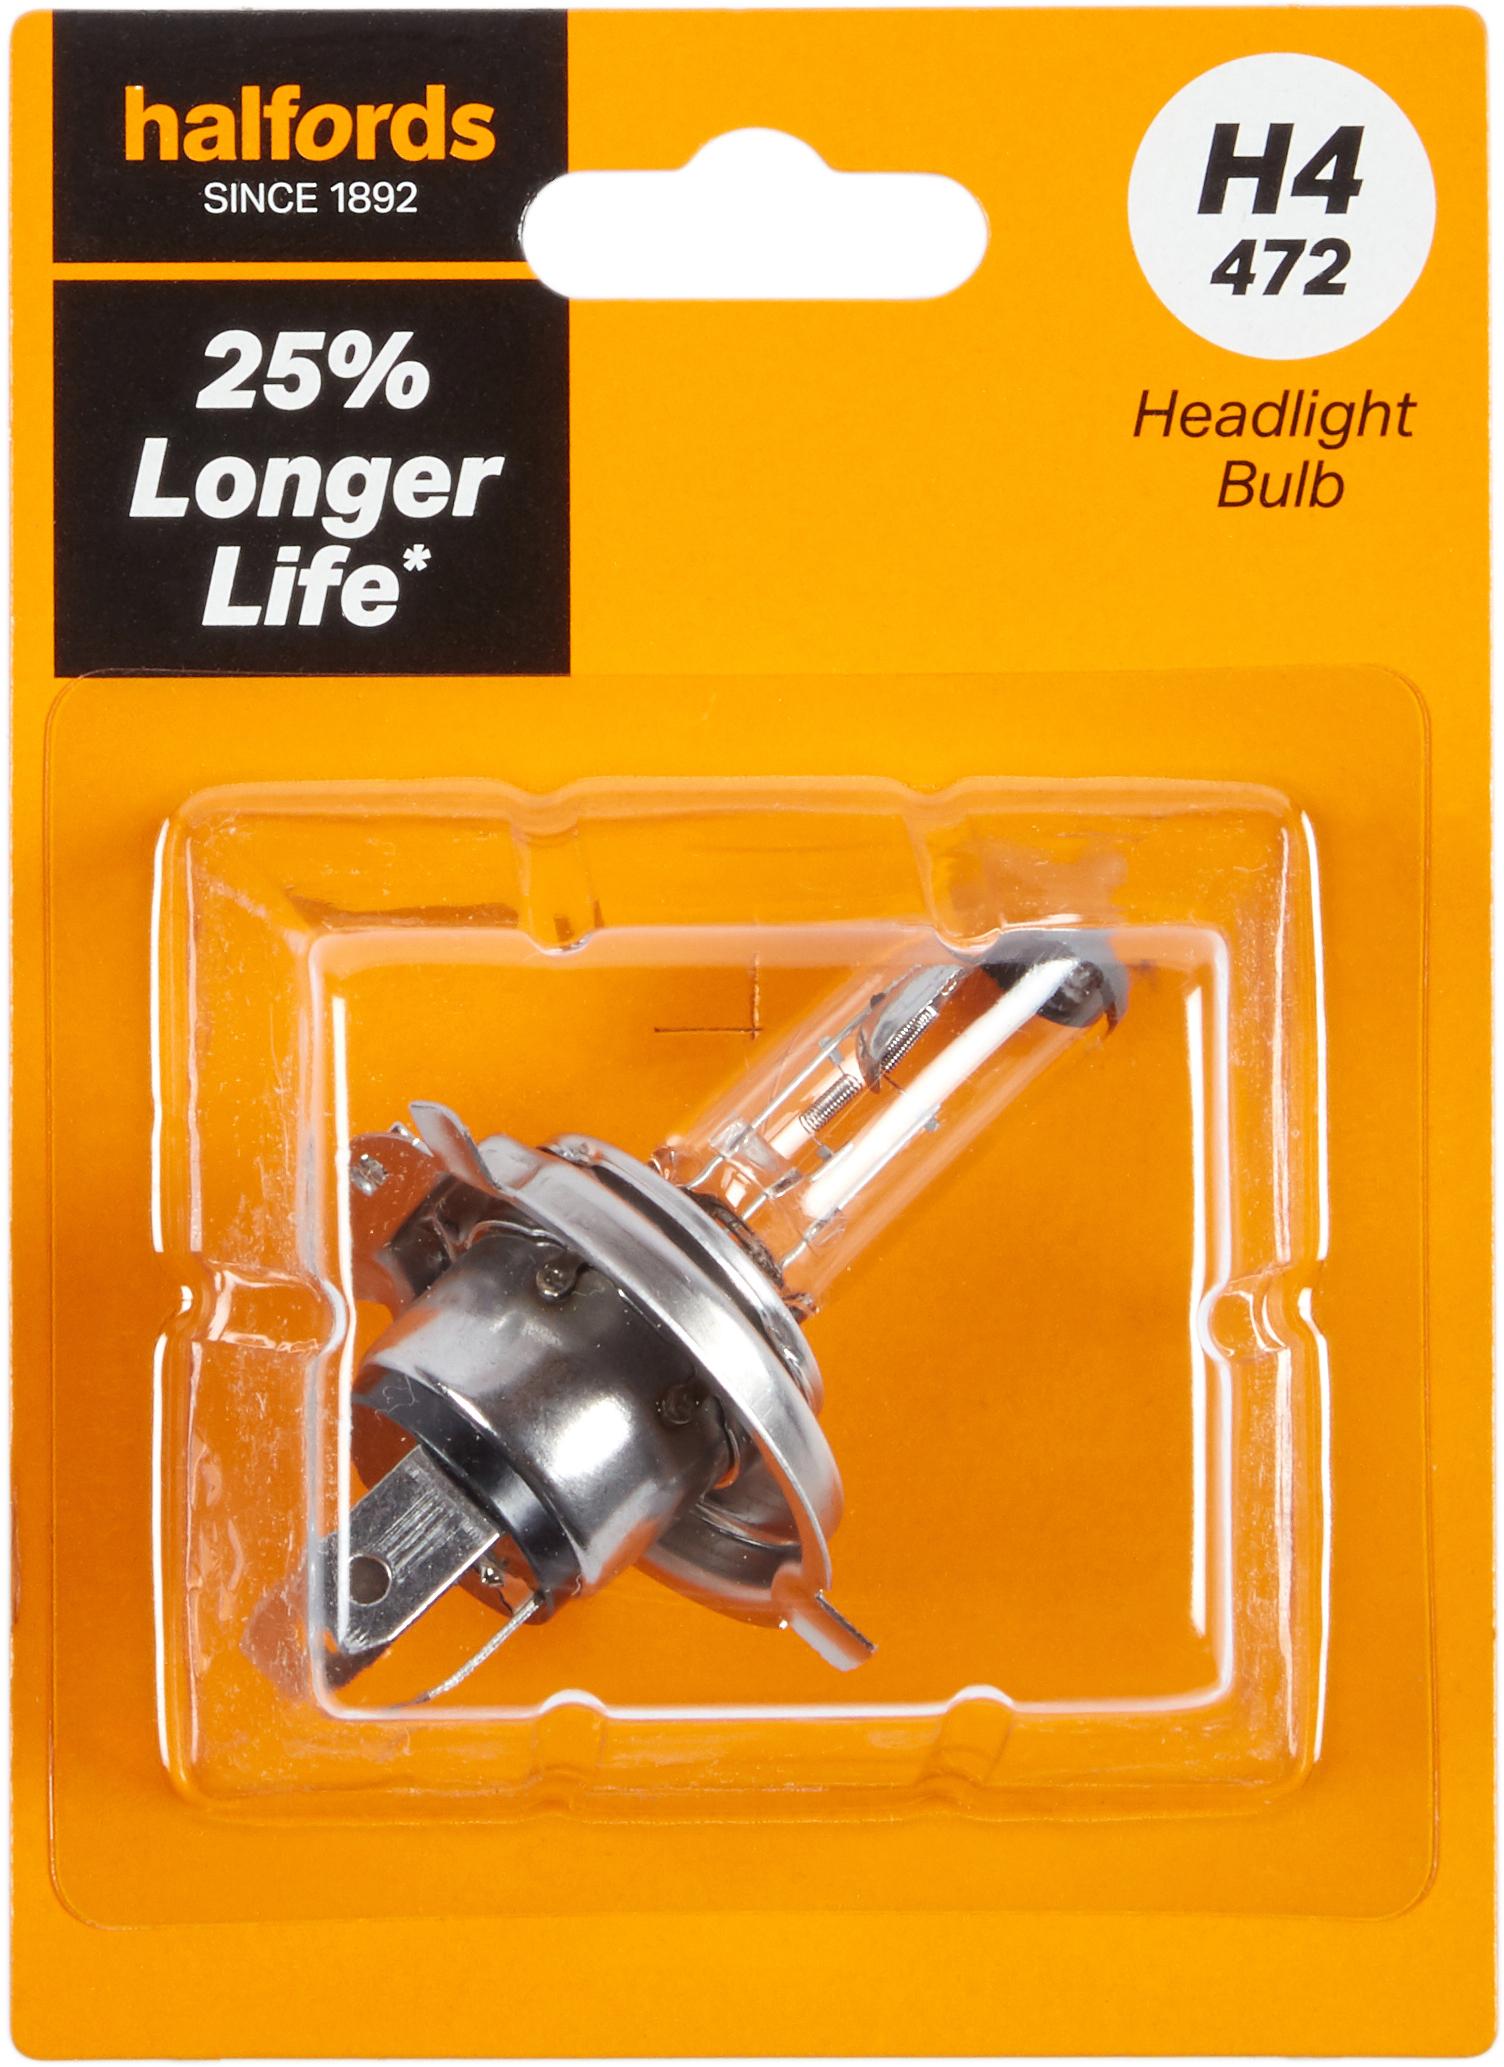 H4 472 Car Headlight Bulb Halfords +25 Percent Longer Life Single Pack